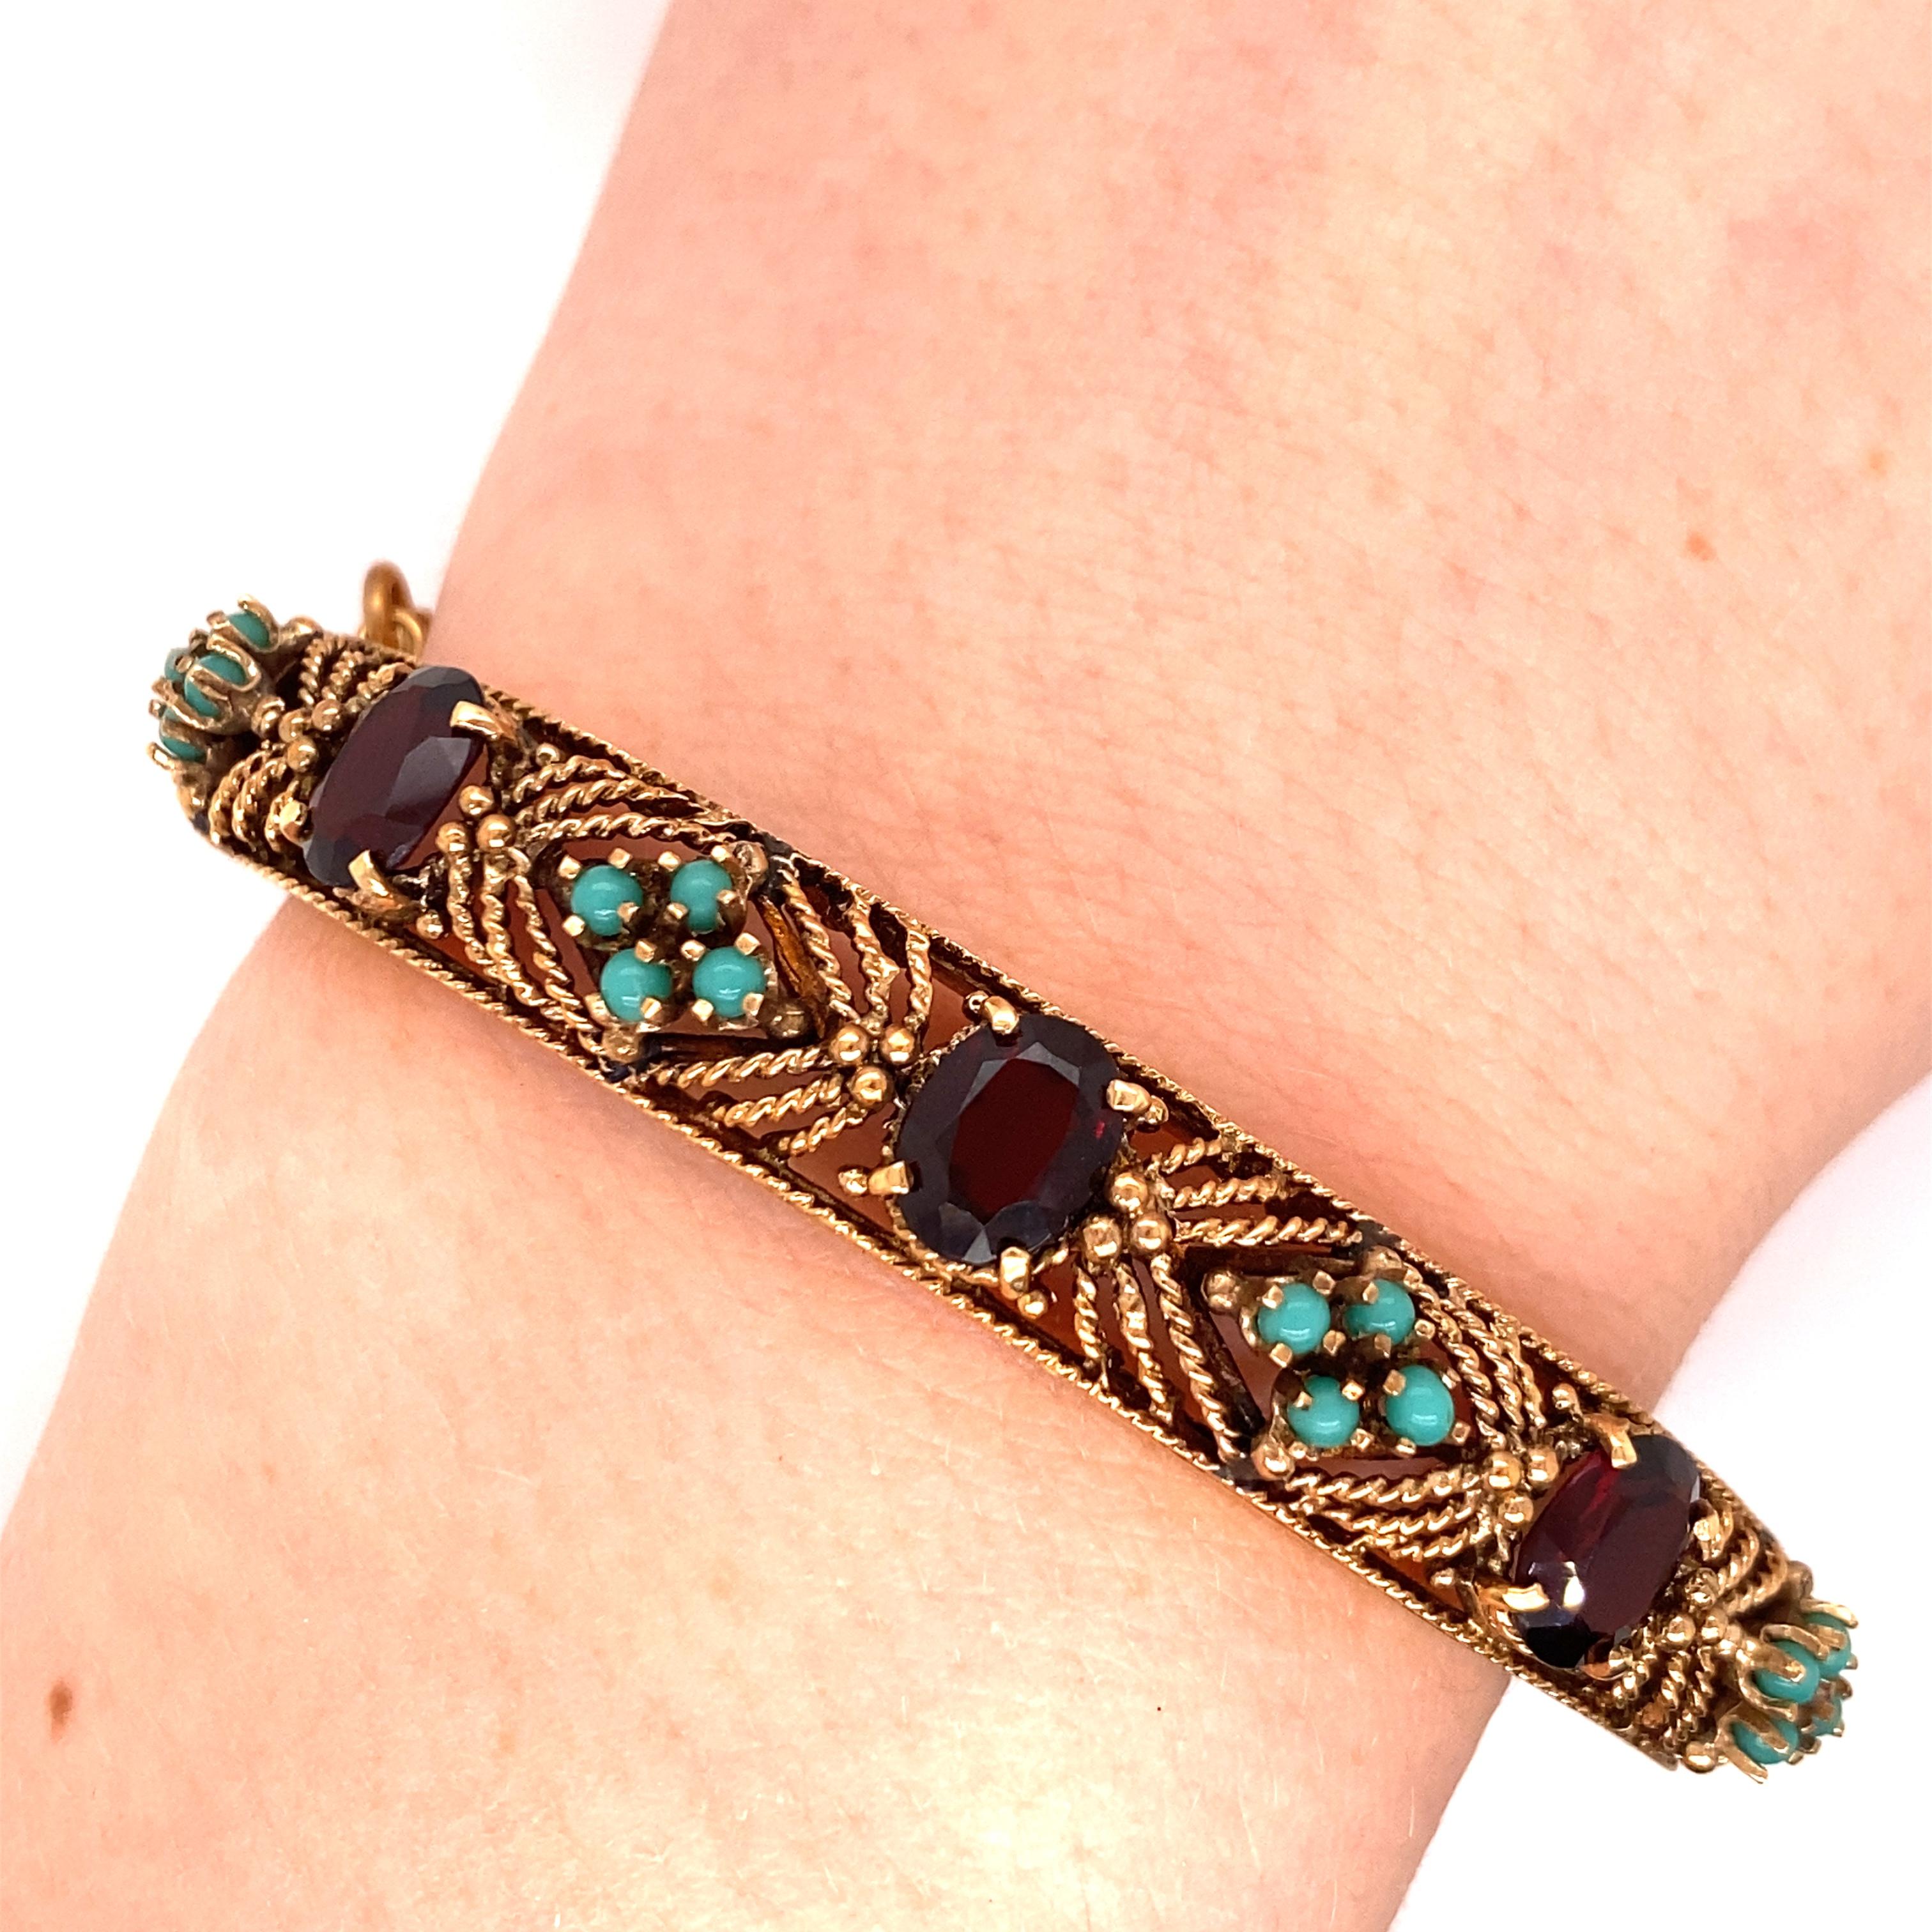 14k gold and turquoise bracelet